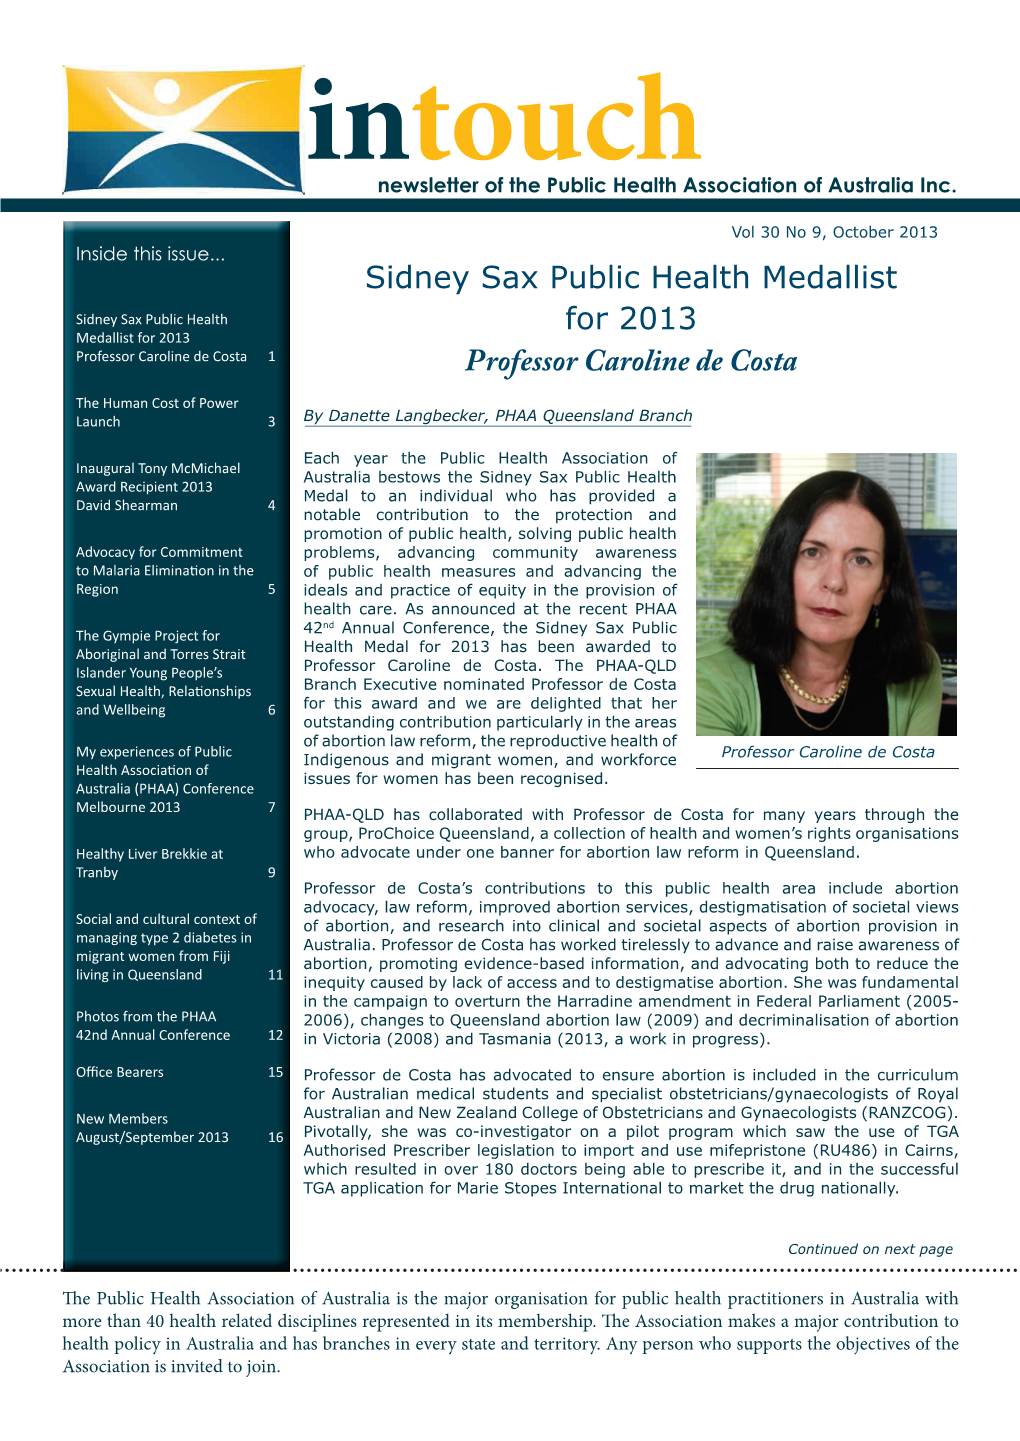 Sidney Sax Public Health Medallist for 2013 Professor Caroline De Costa